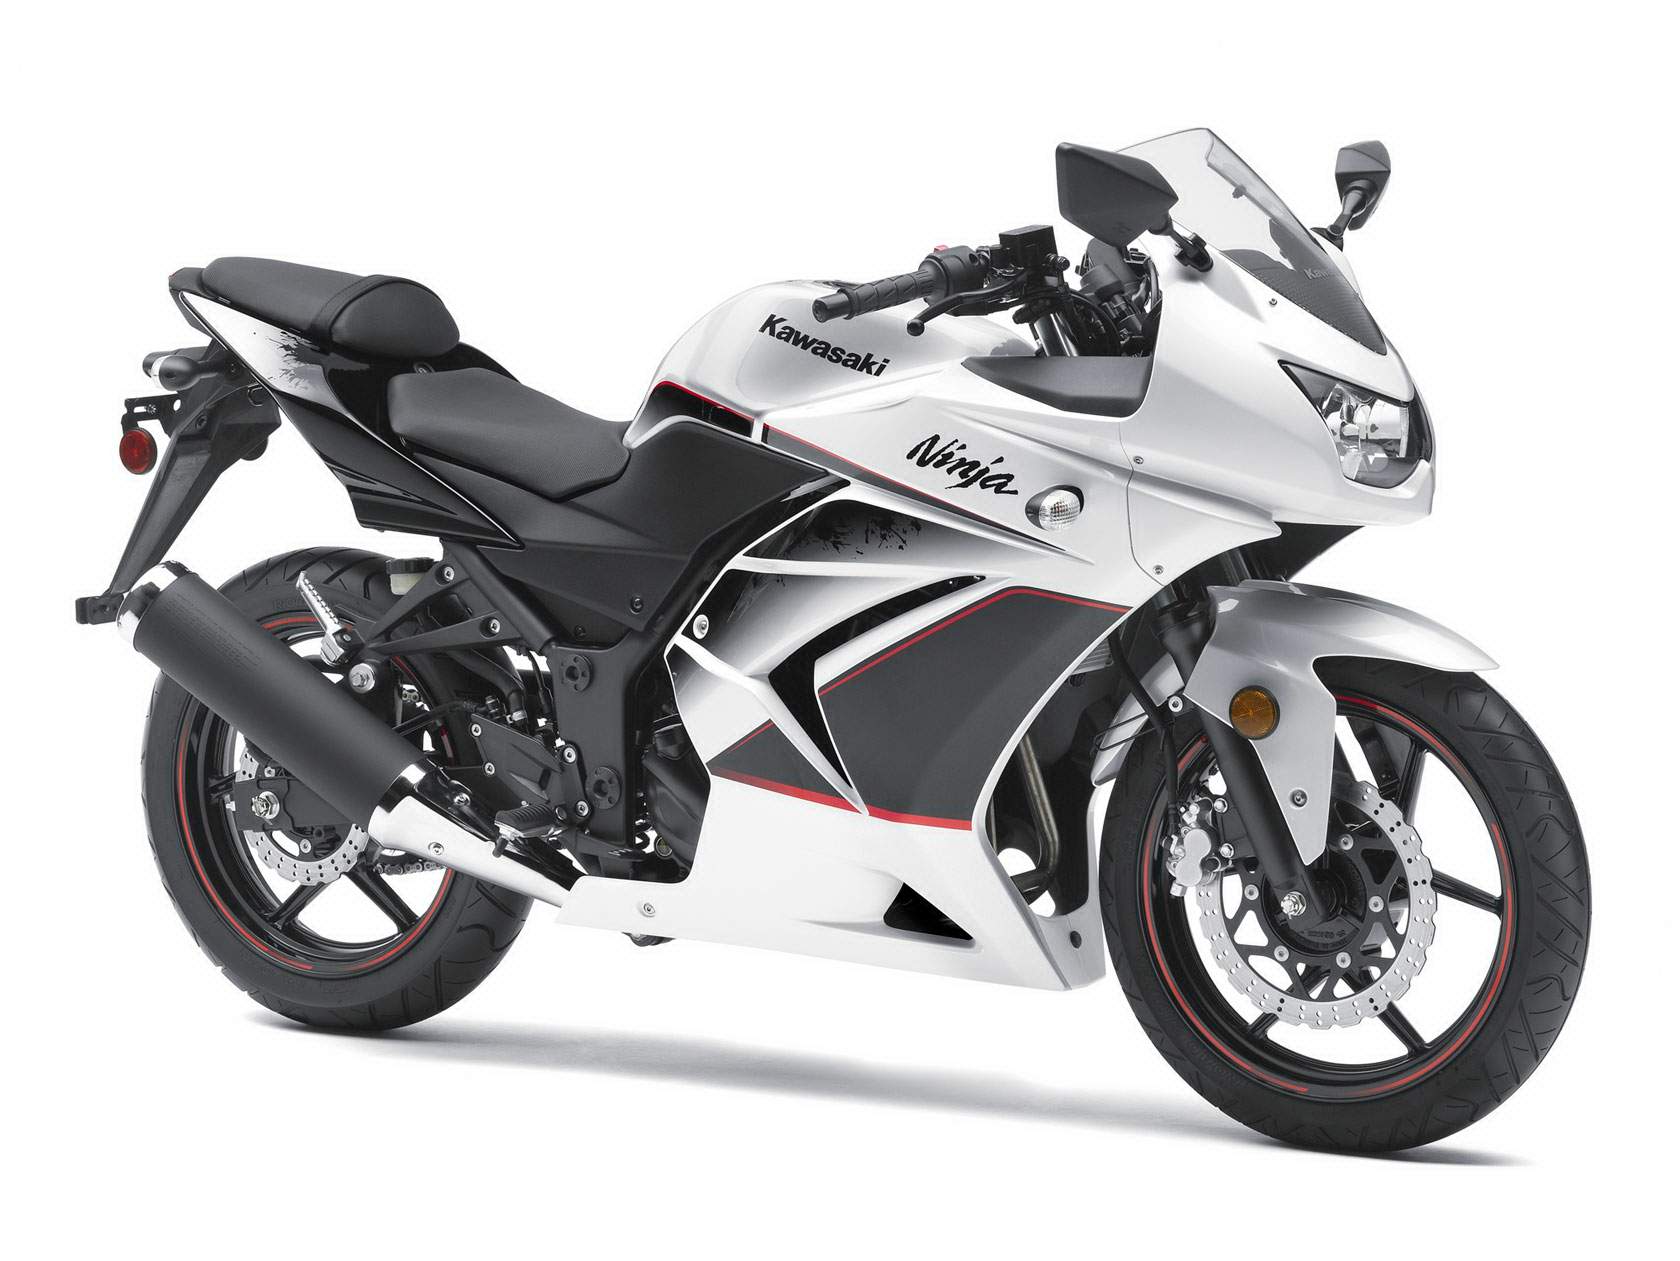 Kawasaki Ninja 250R technical specifications